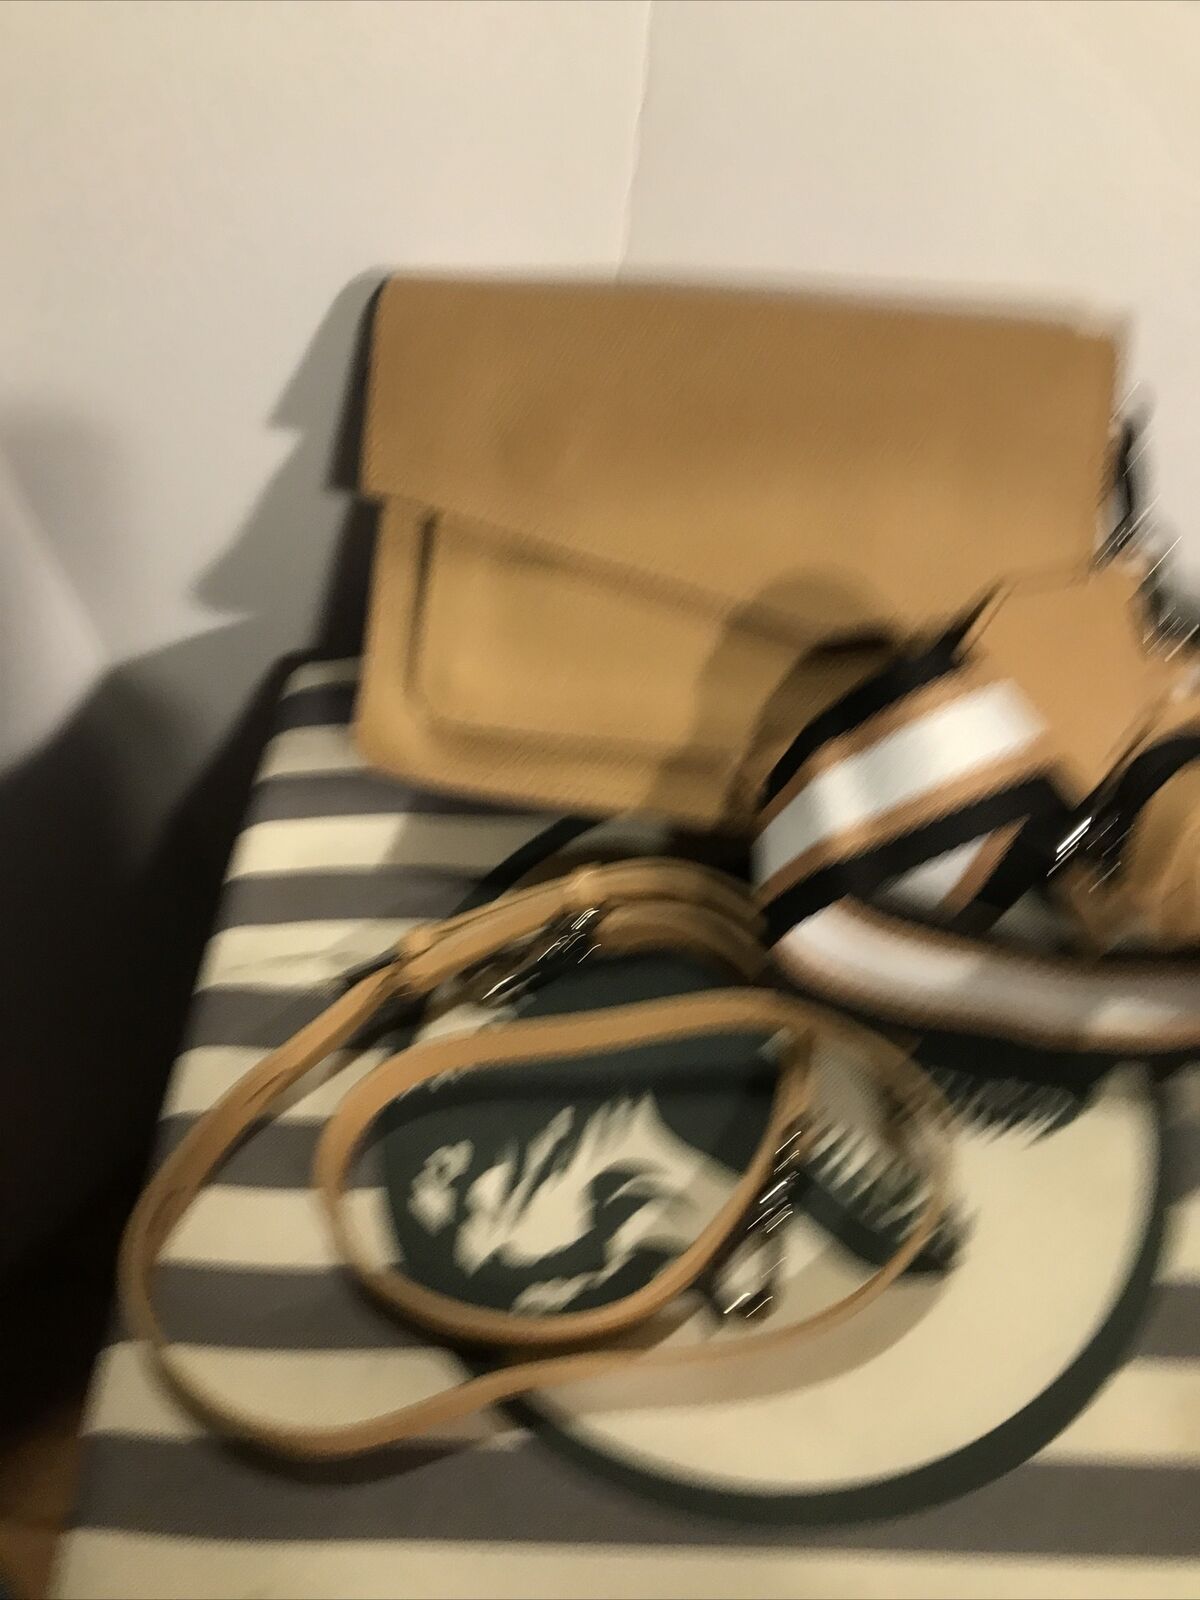 BOTKIER Cobble Hill leather  satchel crossbody bag -COGNAC 2 Straps NWT. $79